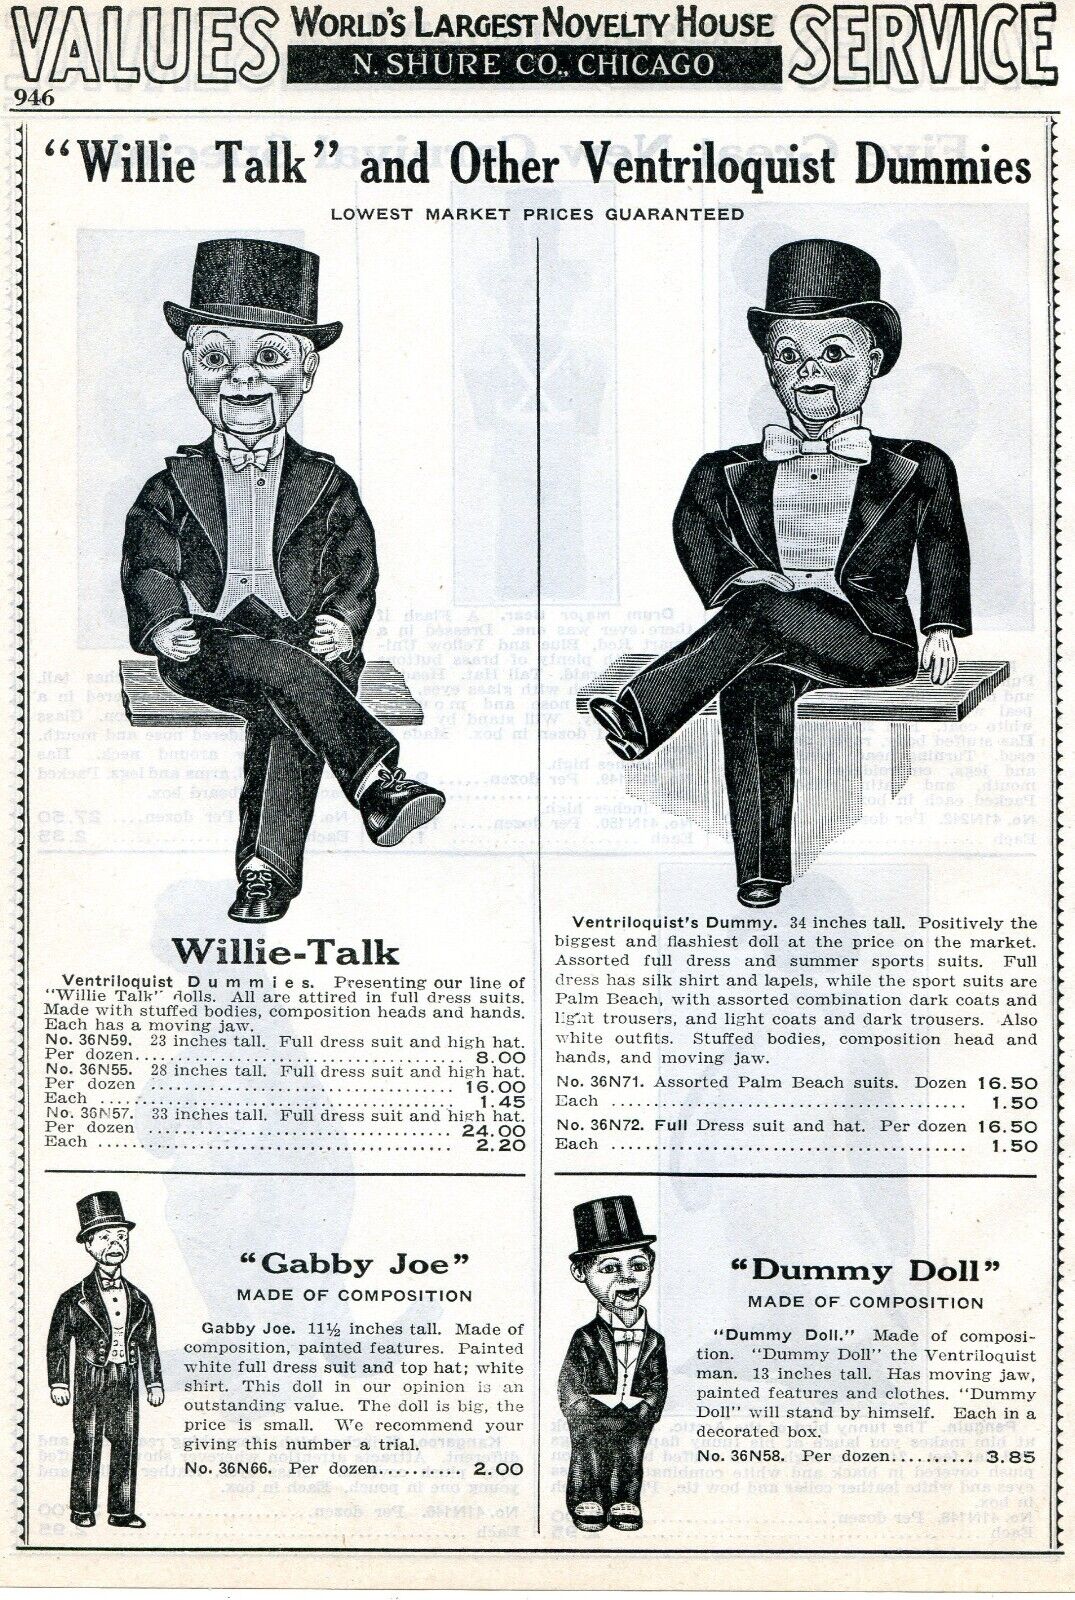 1938 Print Ad of Ventriloquist Dummies Willie Talk, Gabby Joe, Dummy Doll